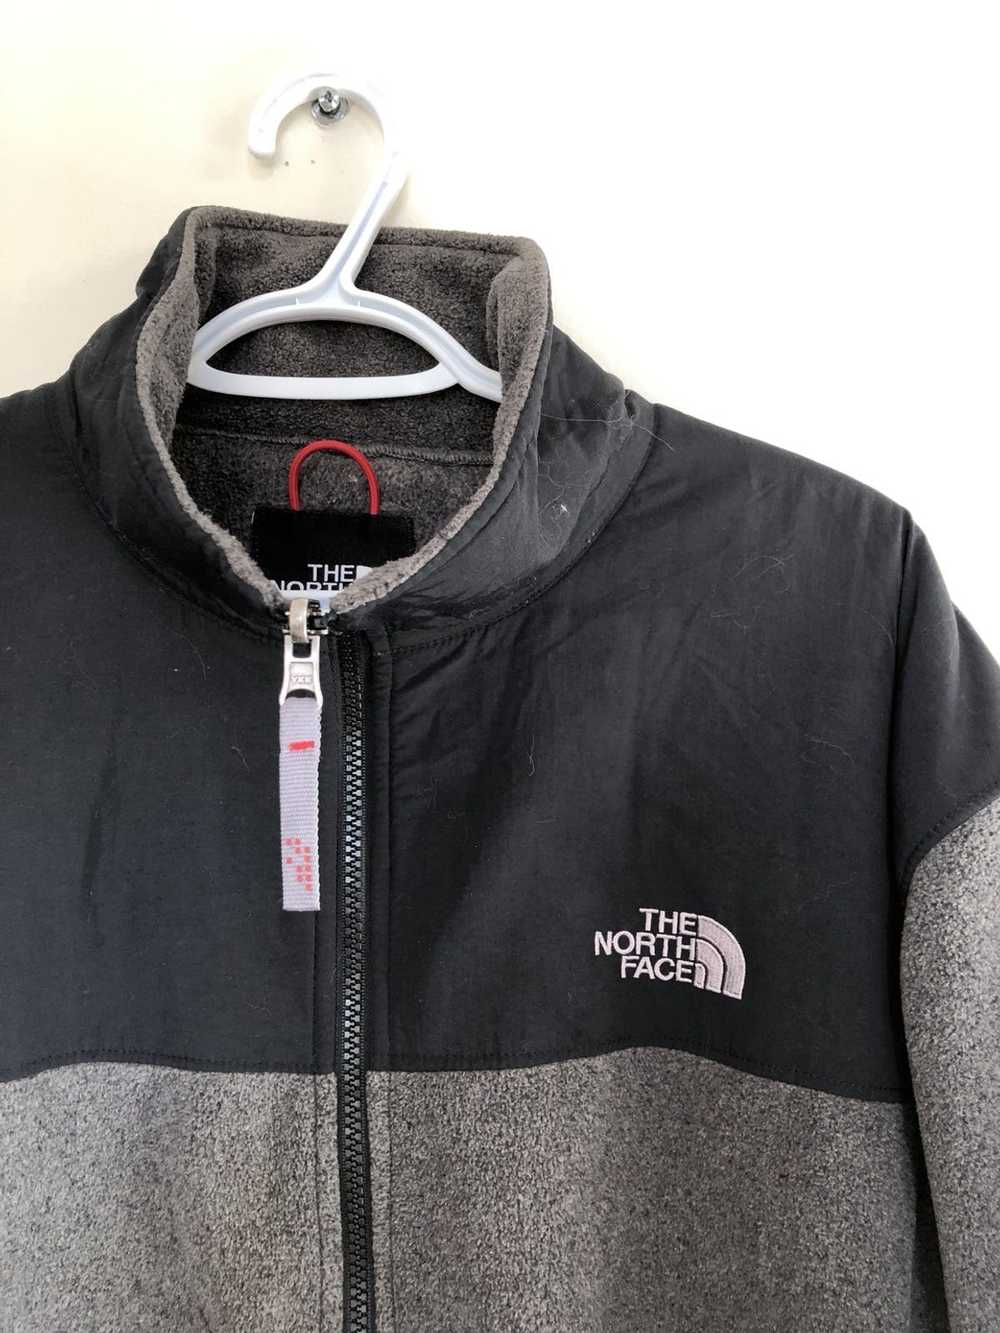 The North Face black/grey fleece jacket - image 3